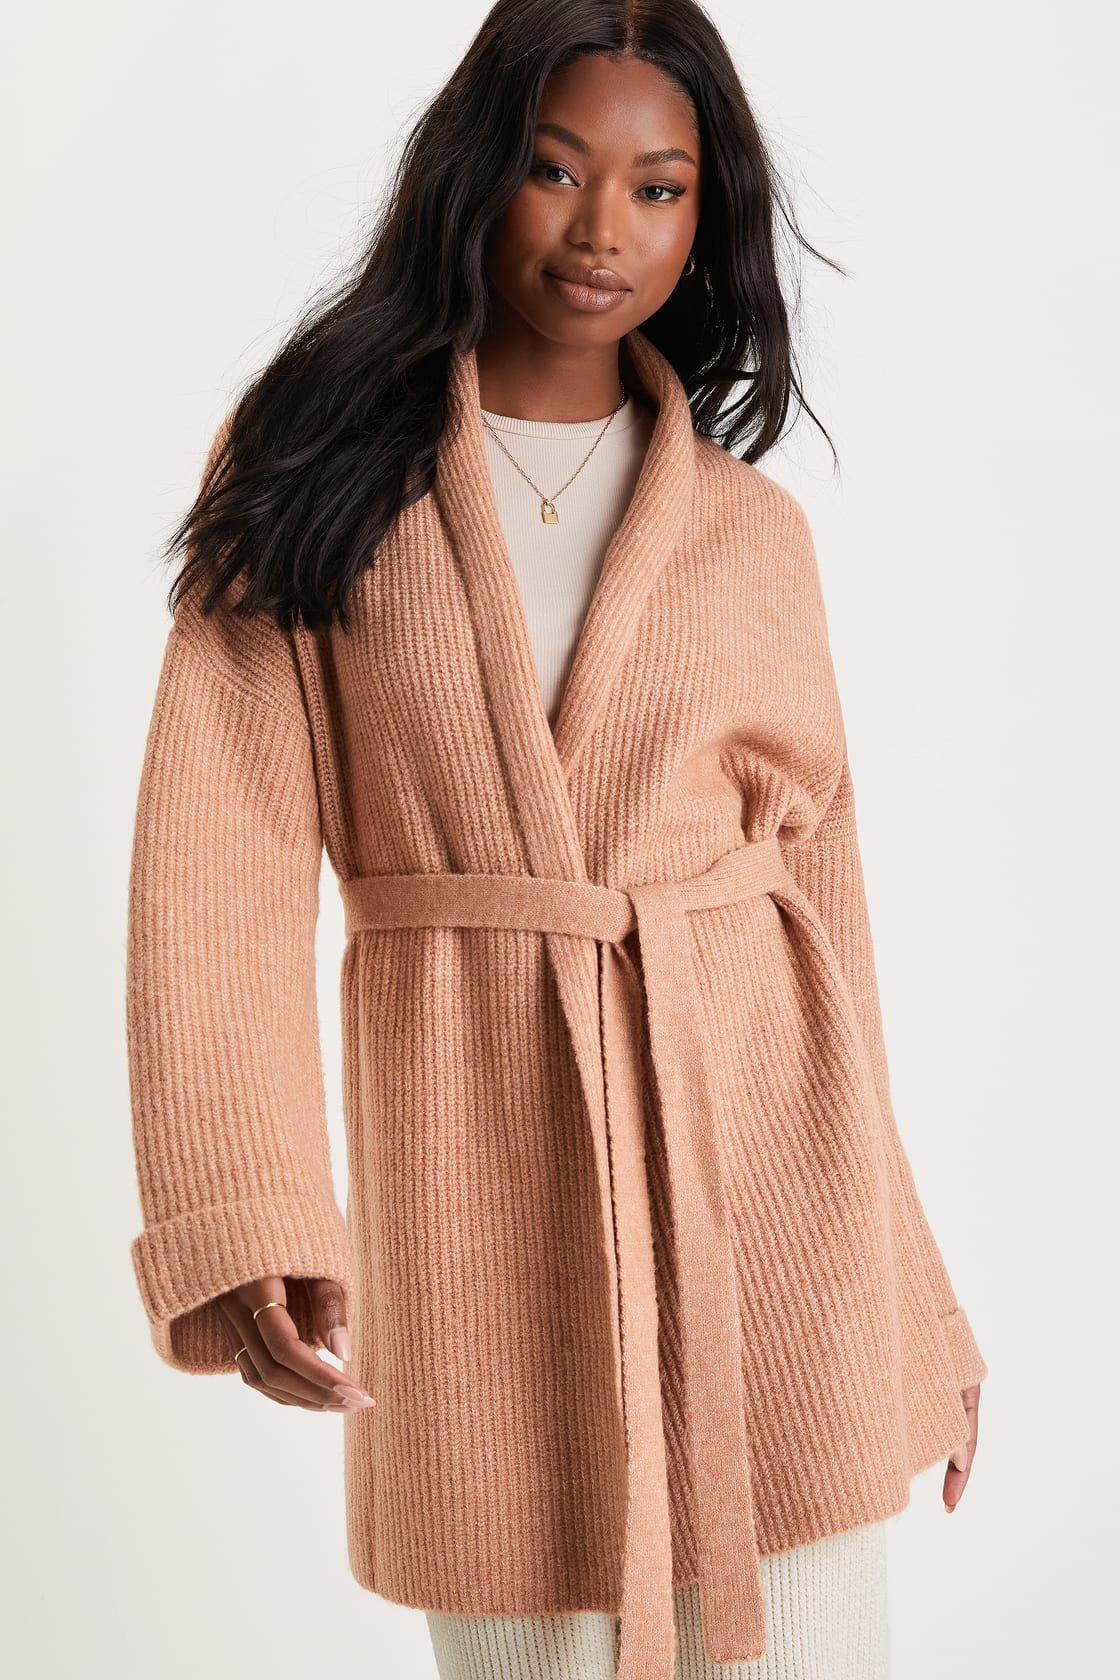 Fireside Favorite Heathered Brown Knit Cardigan Sweater | Lulus (US)